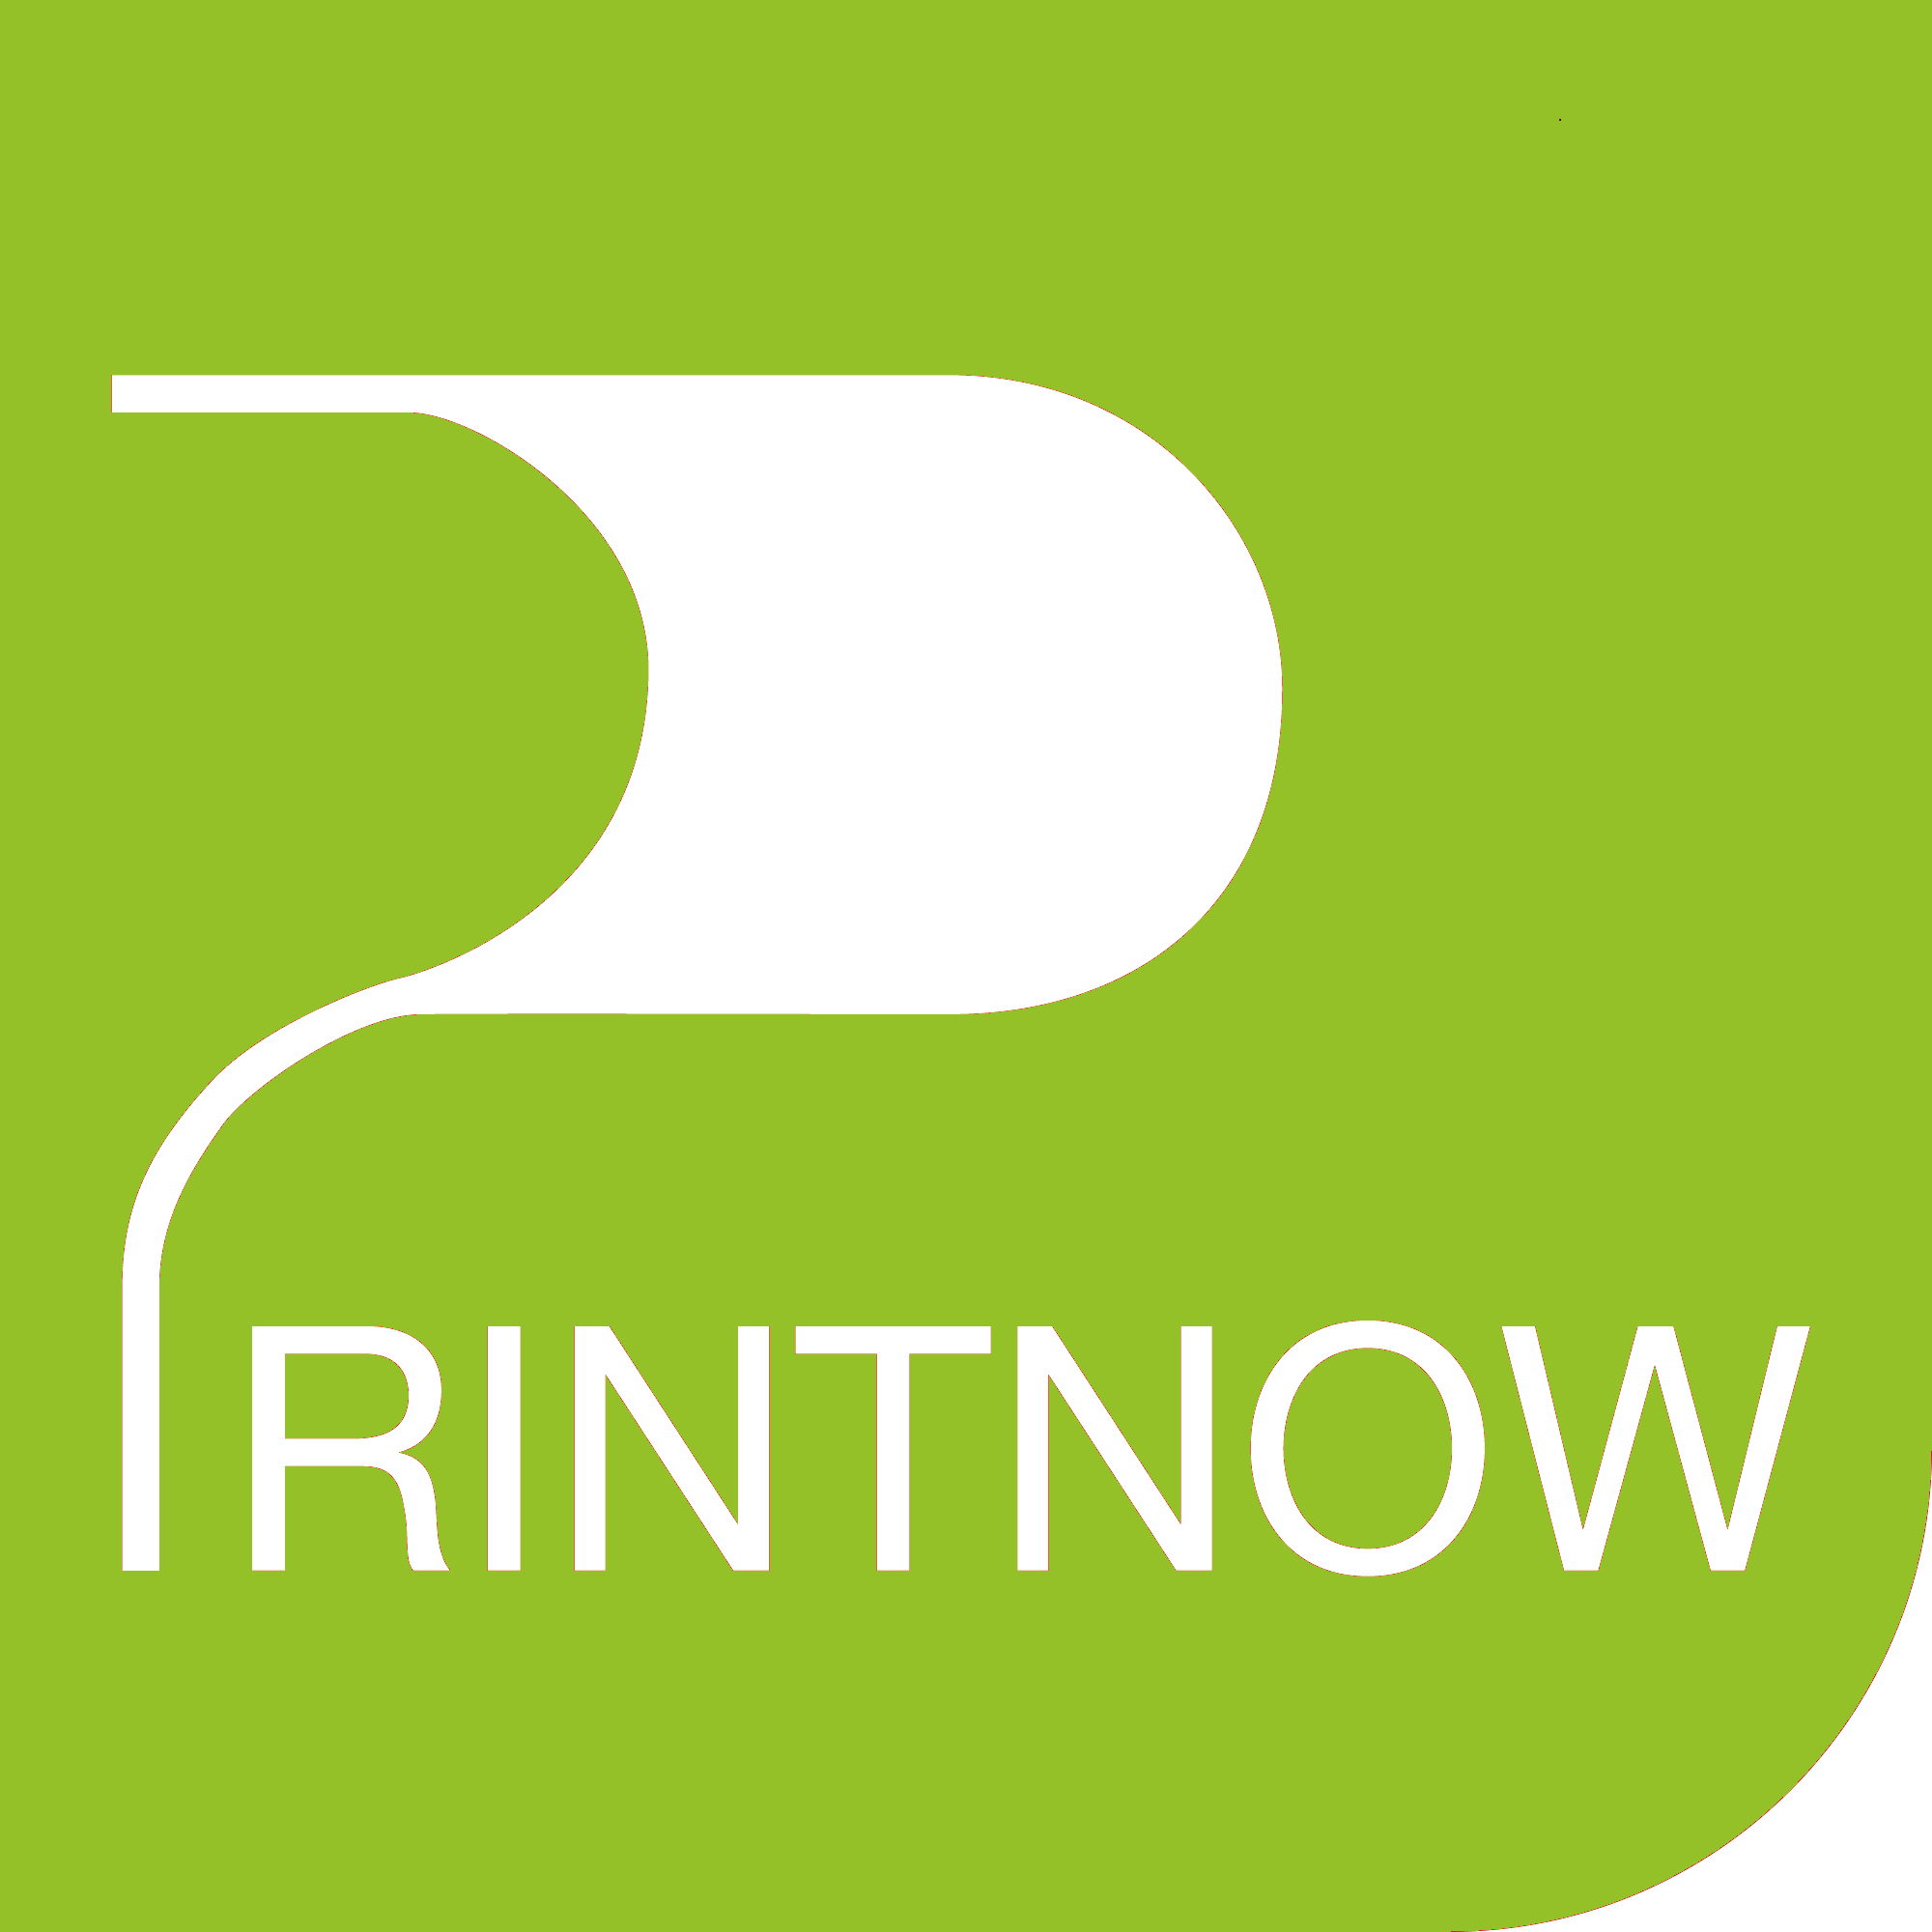 Printnow Logo in Grün